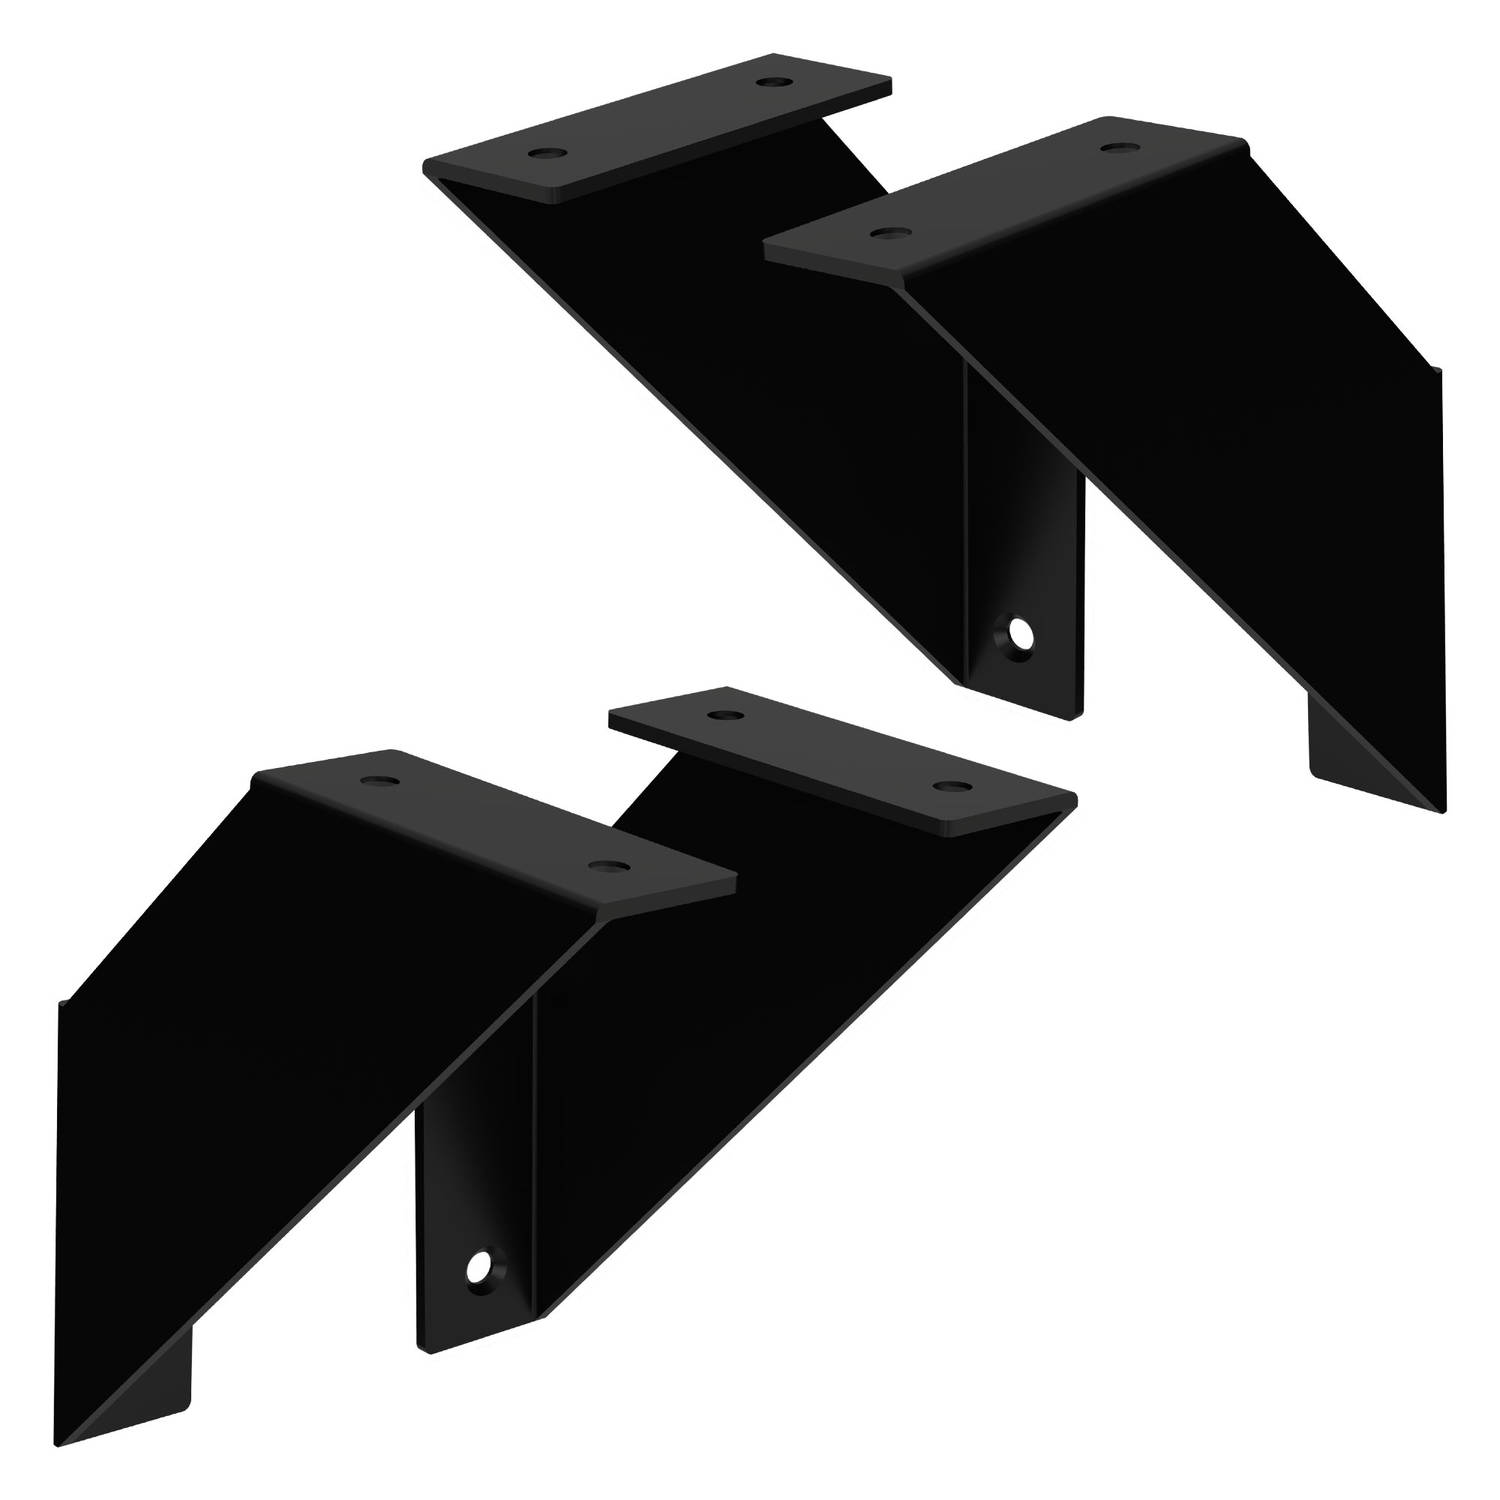 ML-Design 4 stuks plankbeugel 15 cm, zwart, metaal, driehoekige plankbeugels, zwevende plankbeugels, wandbevestiging, 90° wandbeugel, planksteun wandplank hangplank planksteun